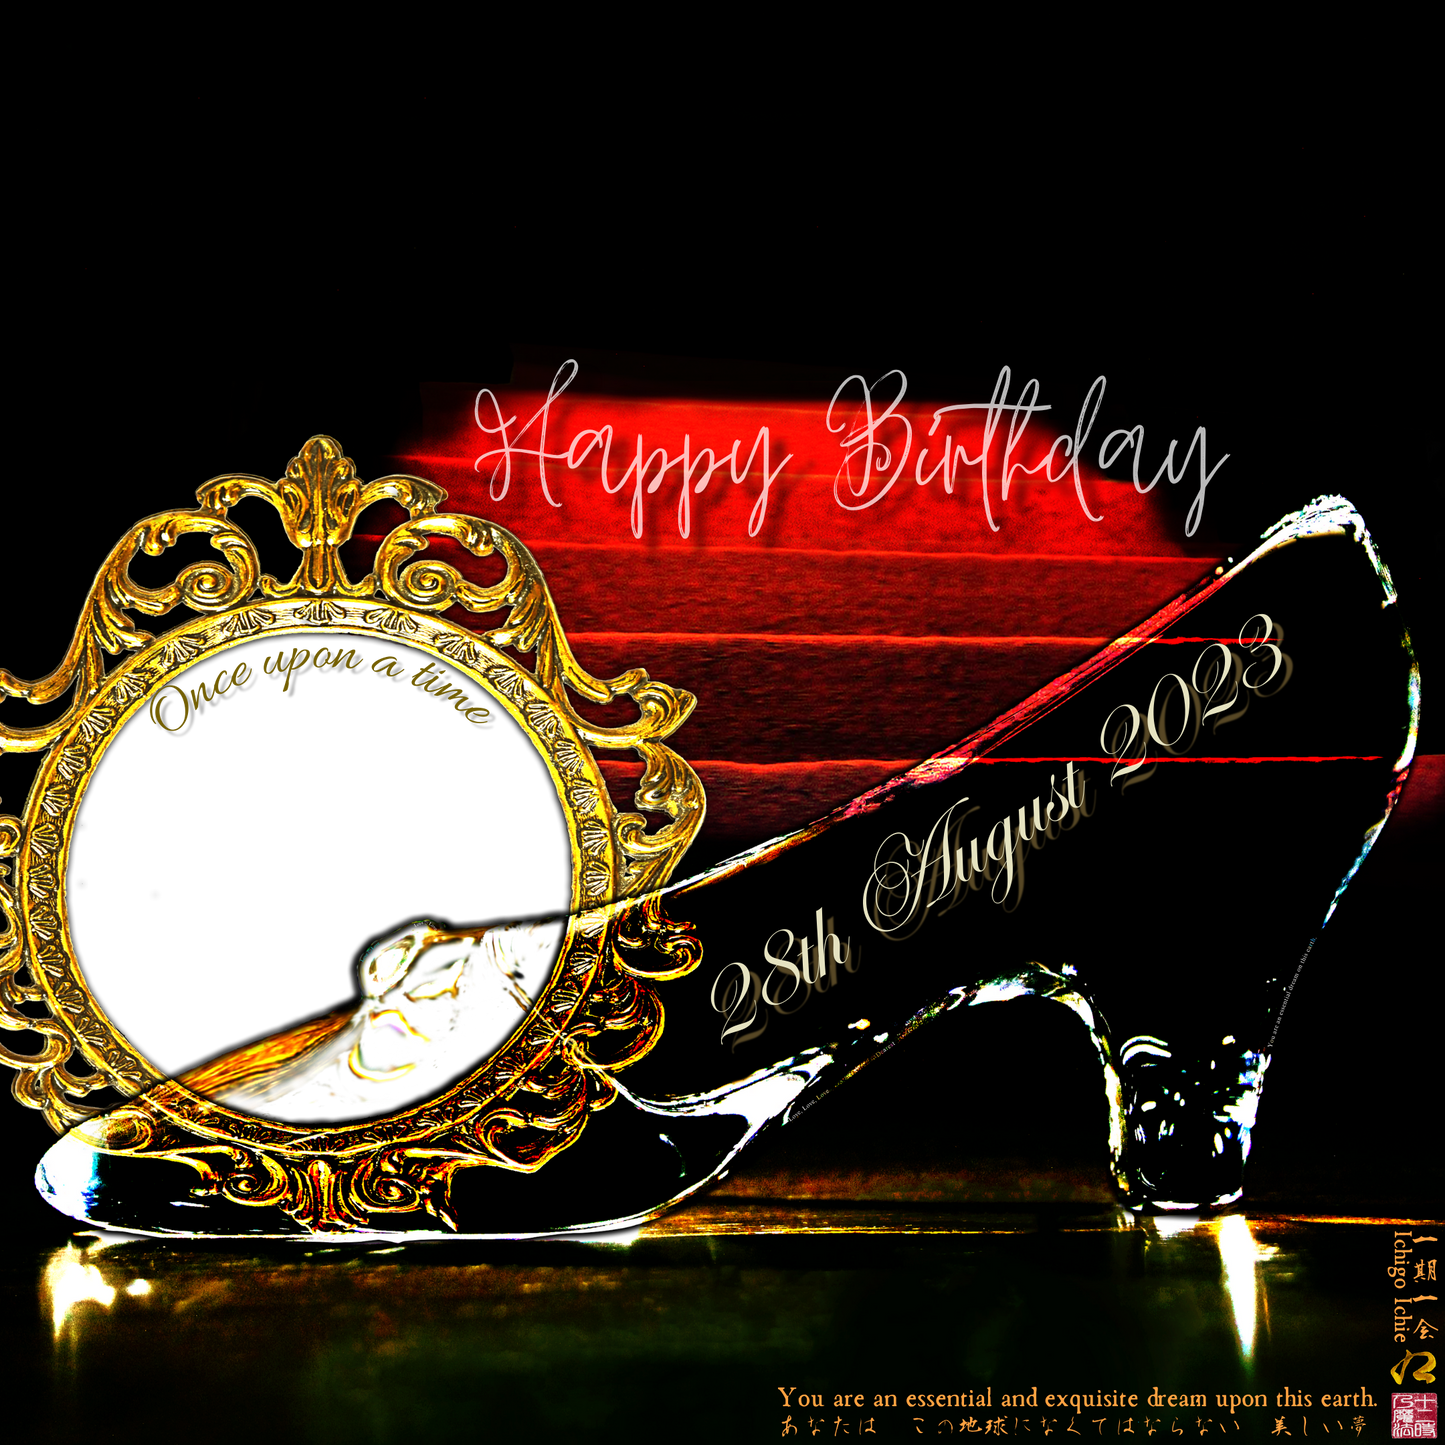 Happy Birthday Glass Slipper "Ichigo Ichie" 28th August 2023 the Left (1-of-1) NFT Art